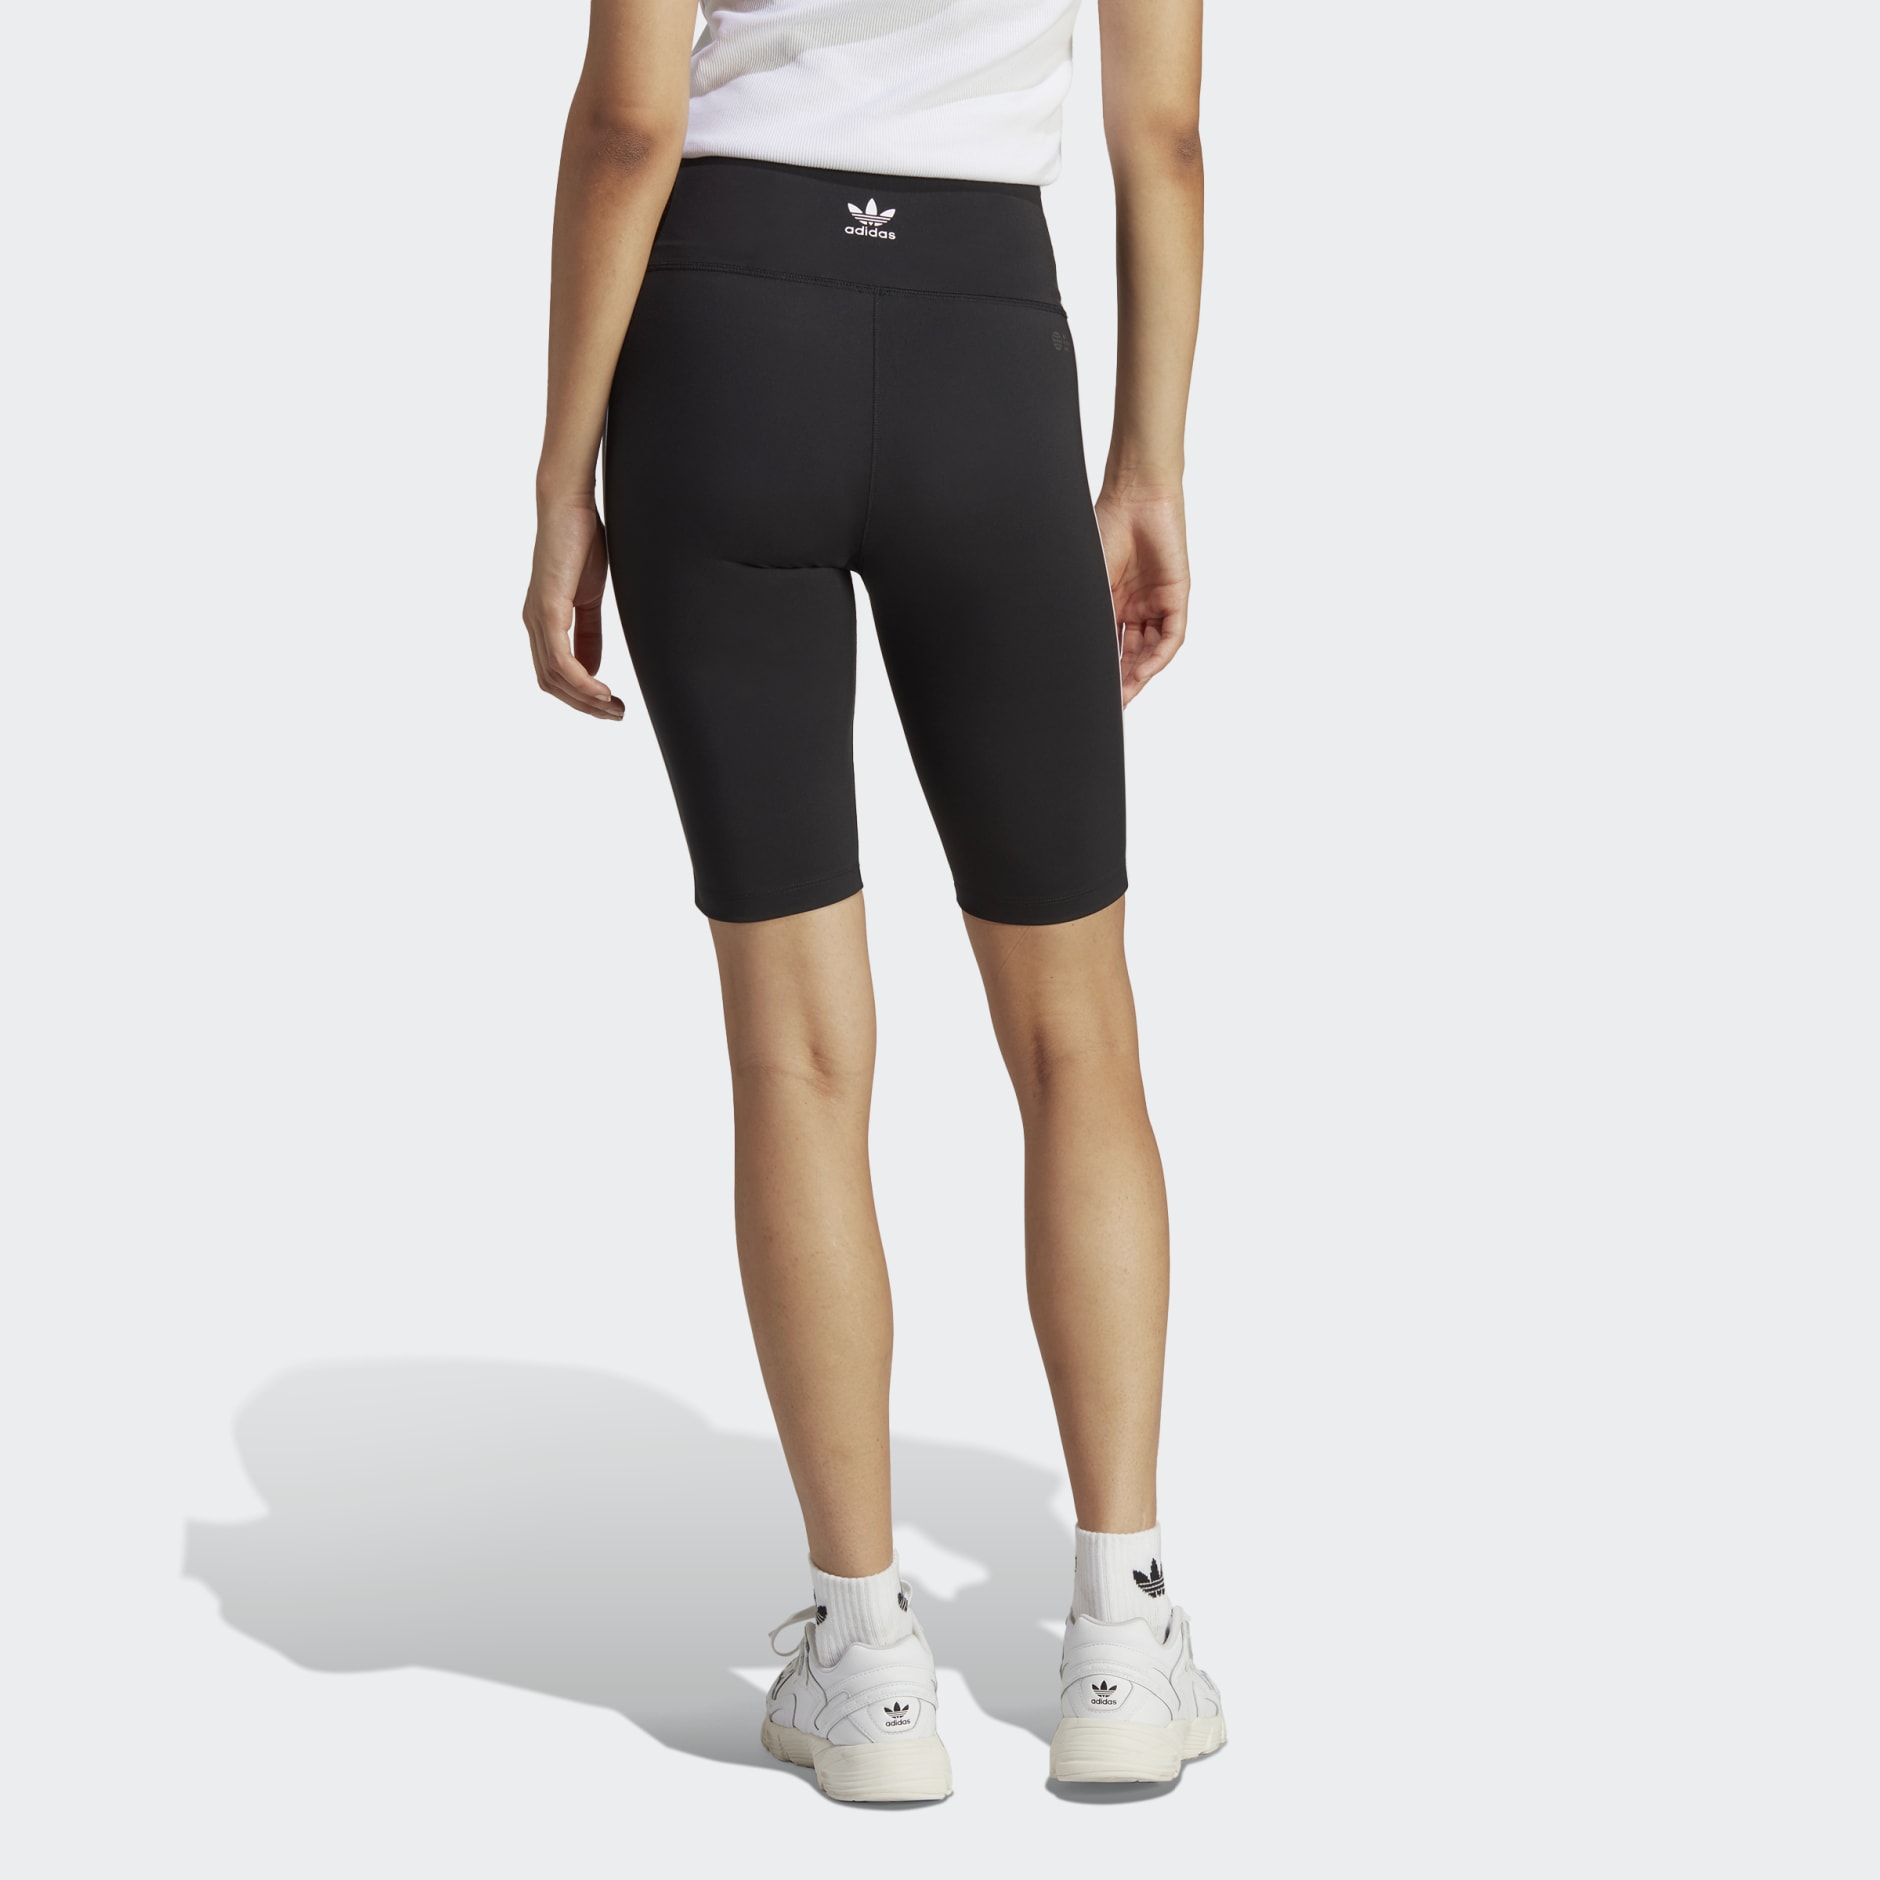 Buy Best shorts+leggings Online At Cheap Price, shorts+leggings & Qatar  Shopping